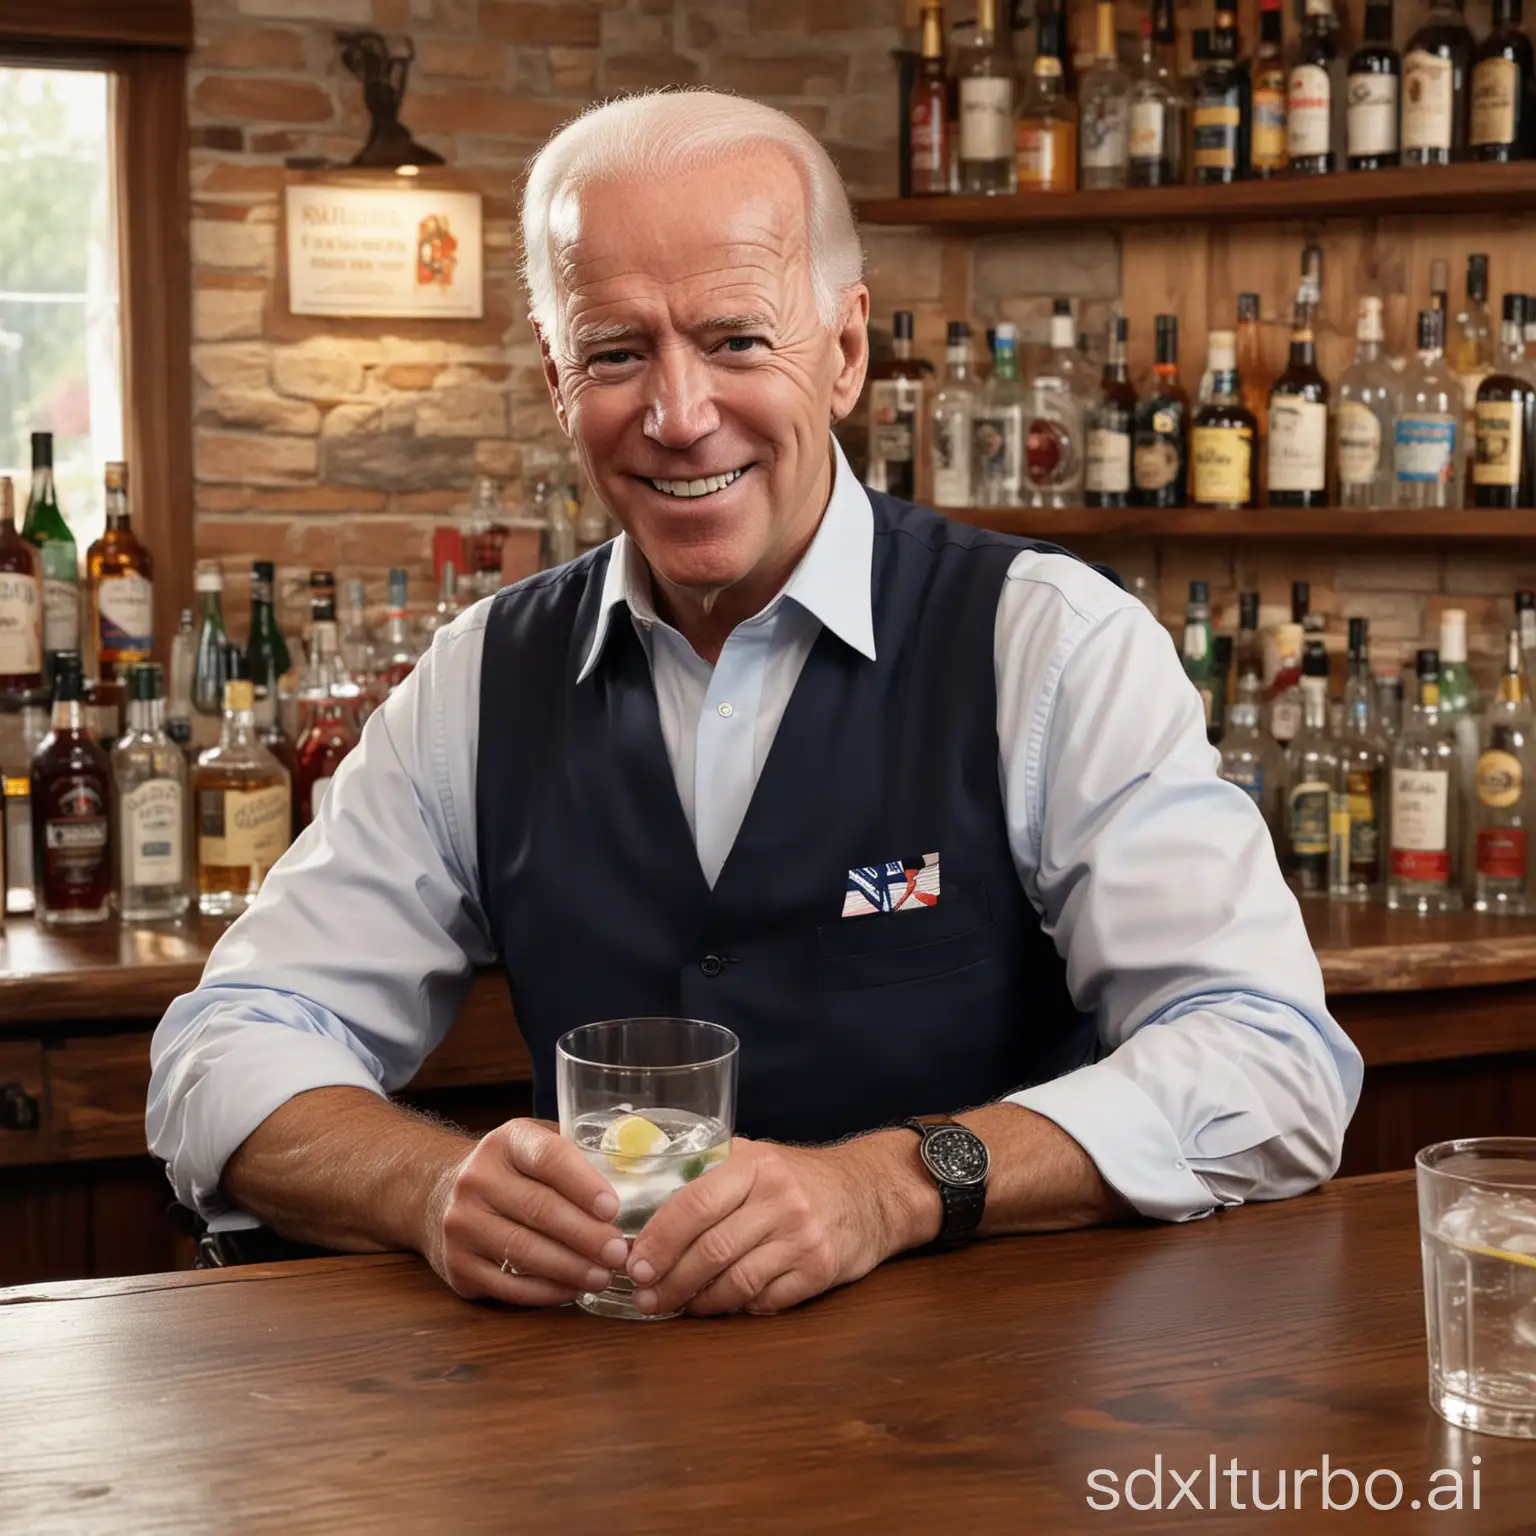 Former-Vice-President-Joe-Biden-Enjoying-Gin-Tonics-in-a-Western-Shootout-Style-Drink-Off